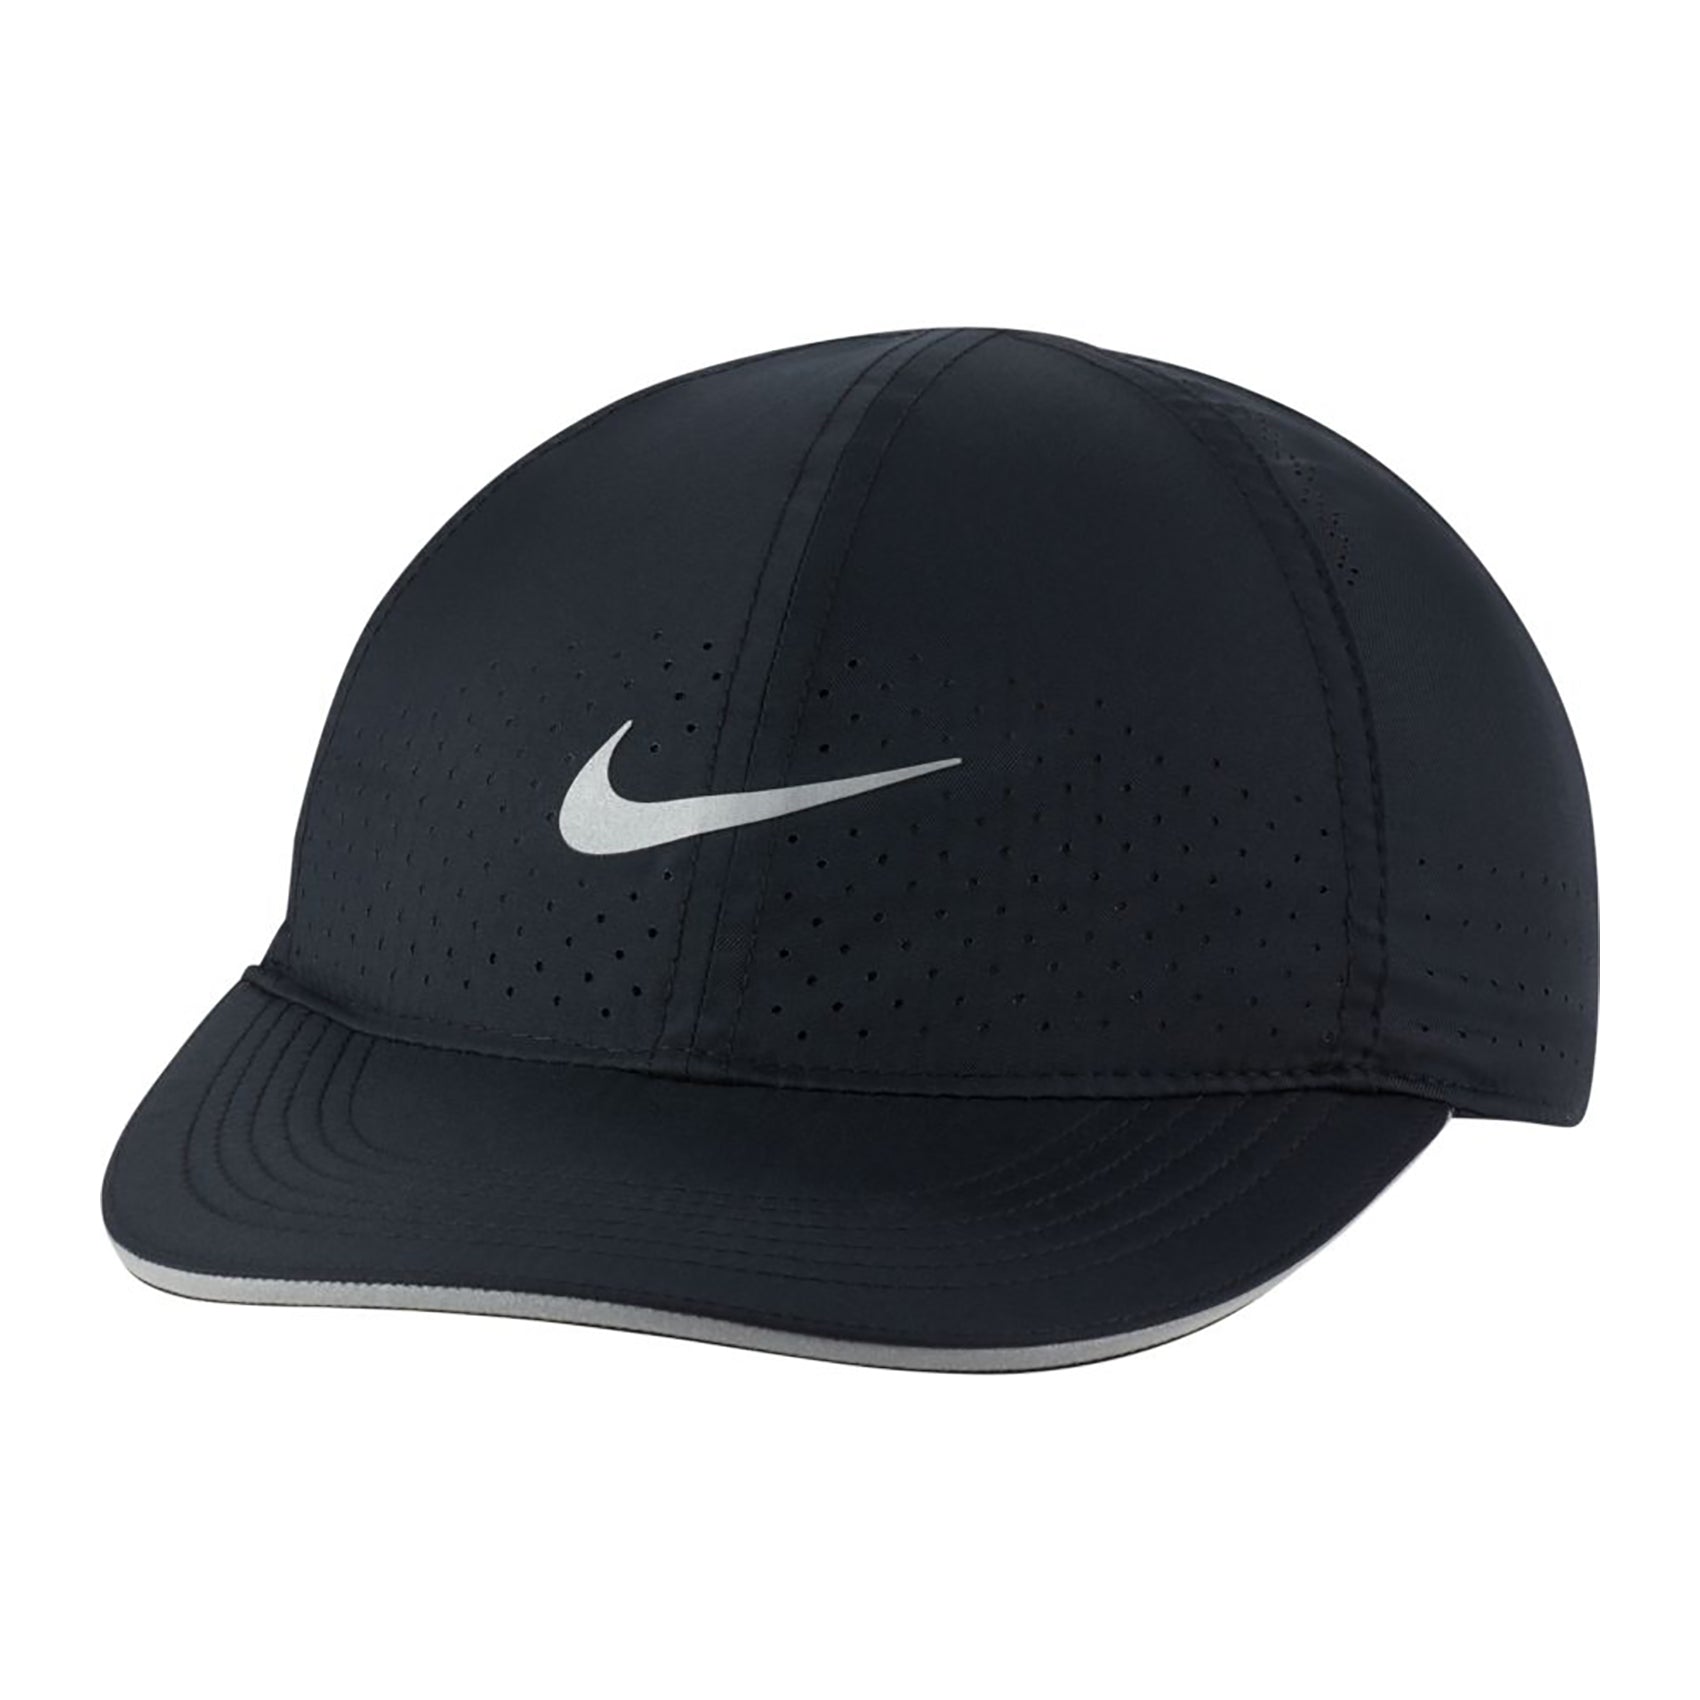 New Nike Feather Light Cap Hat Dri Fit Running Tennis Football